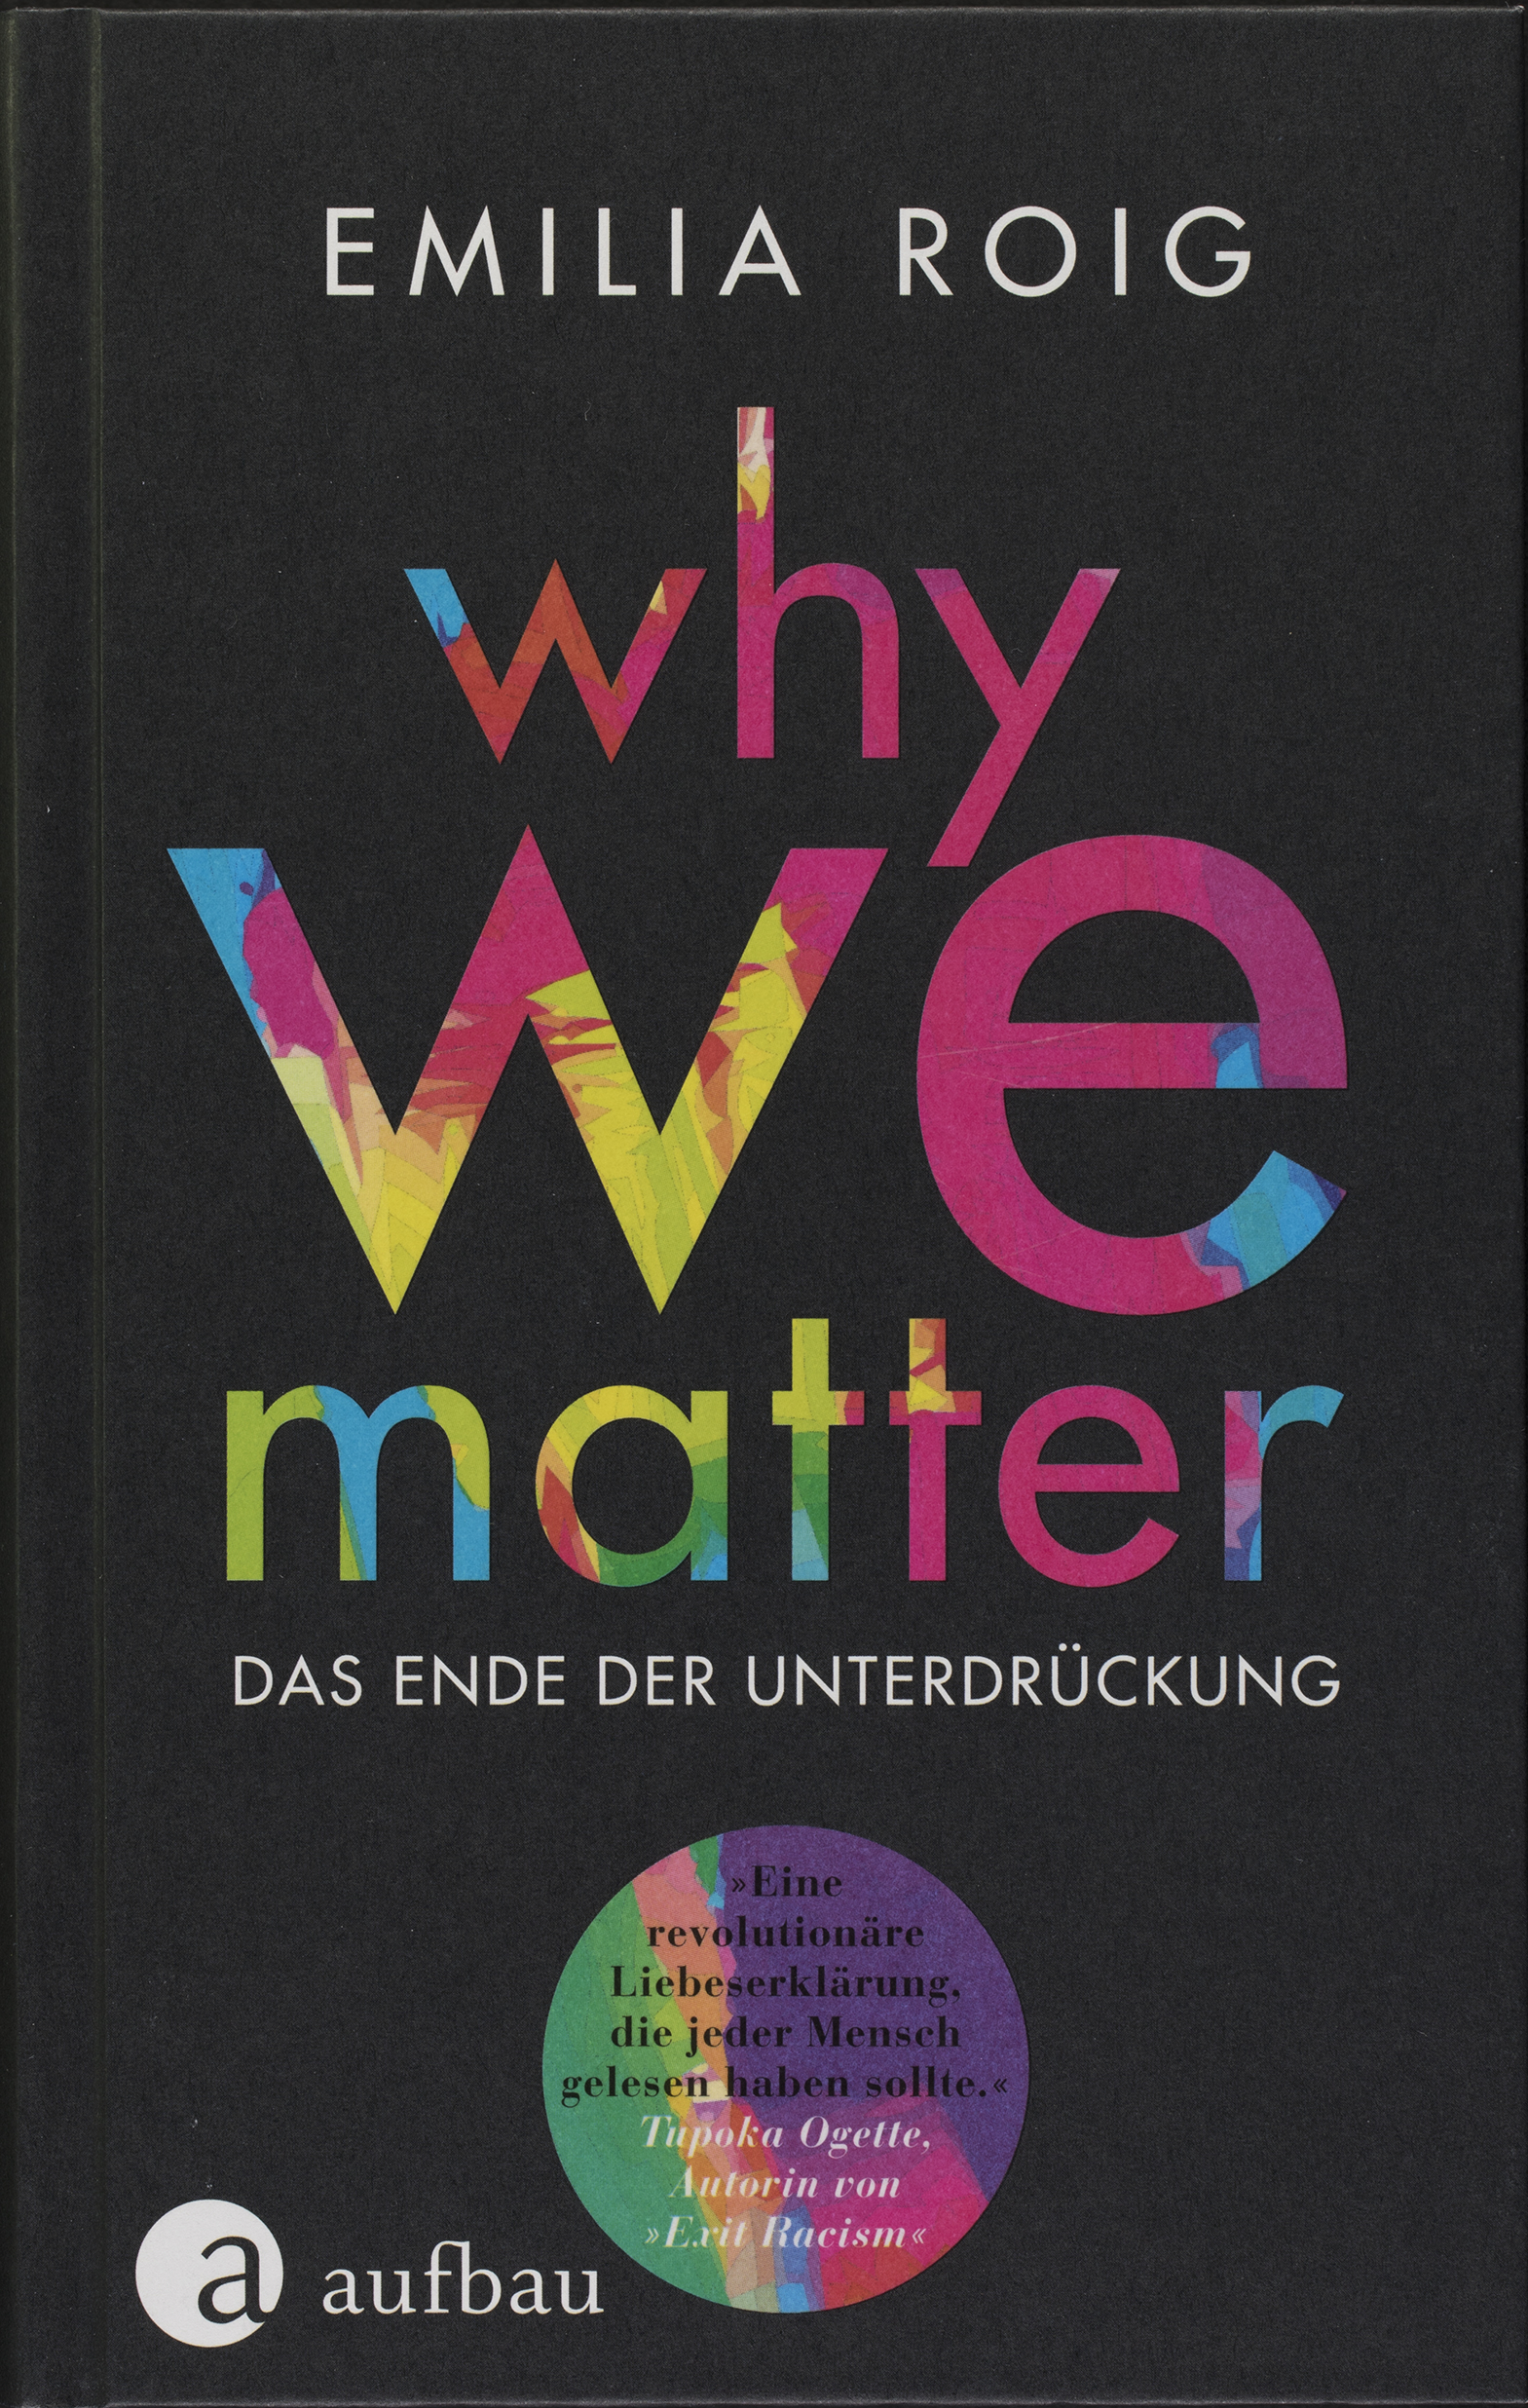 Emilia Roig: Why We Matter. Das Ende der Unterdrückung. Berlin: Aufbau, 2021. Signatur: 10 A 130892